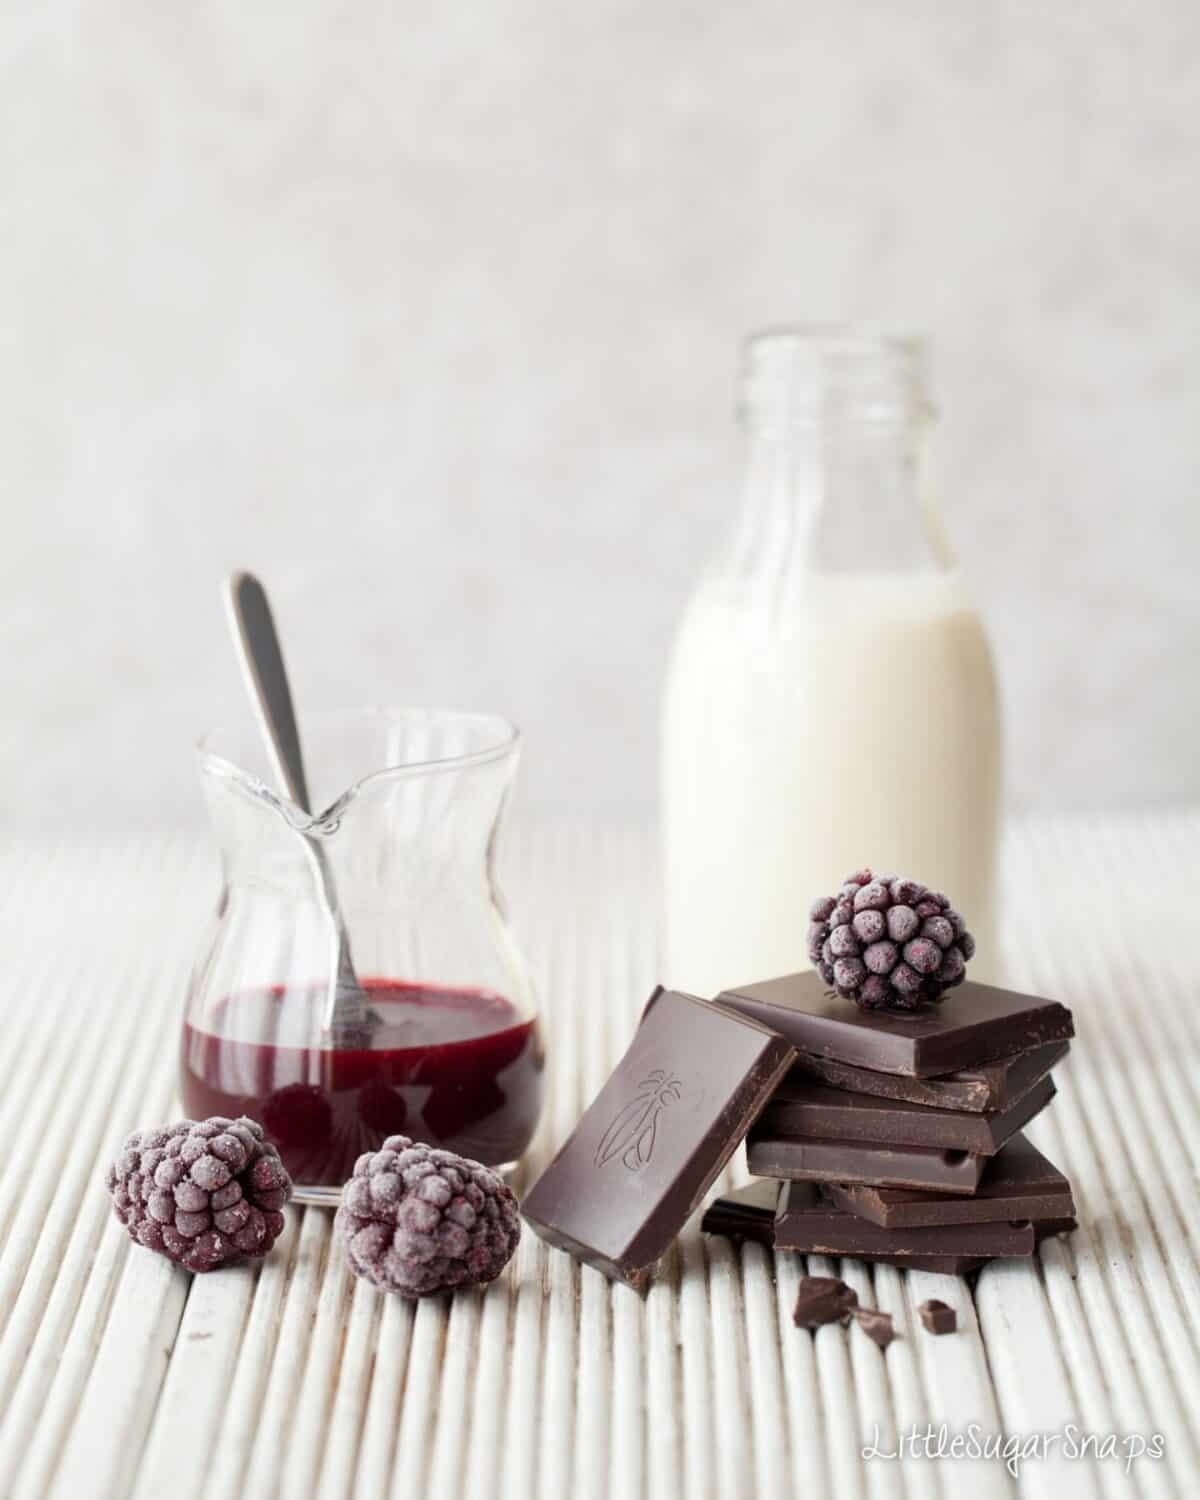 Hot chocolate ingredients: milk, dark chocolate blackberries and blackberry sauce.